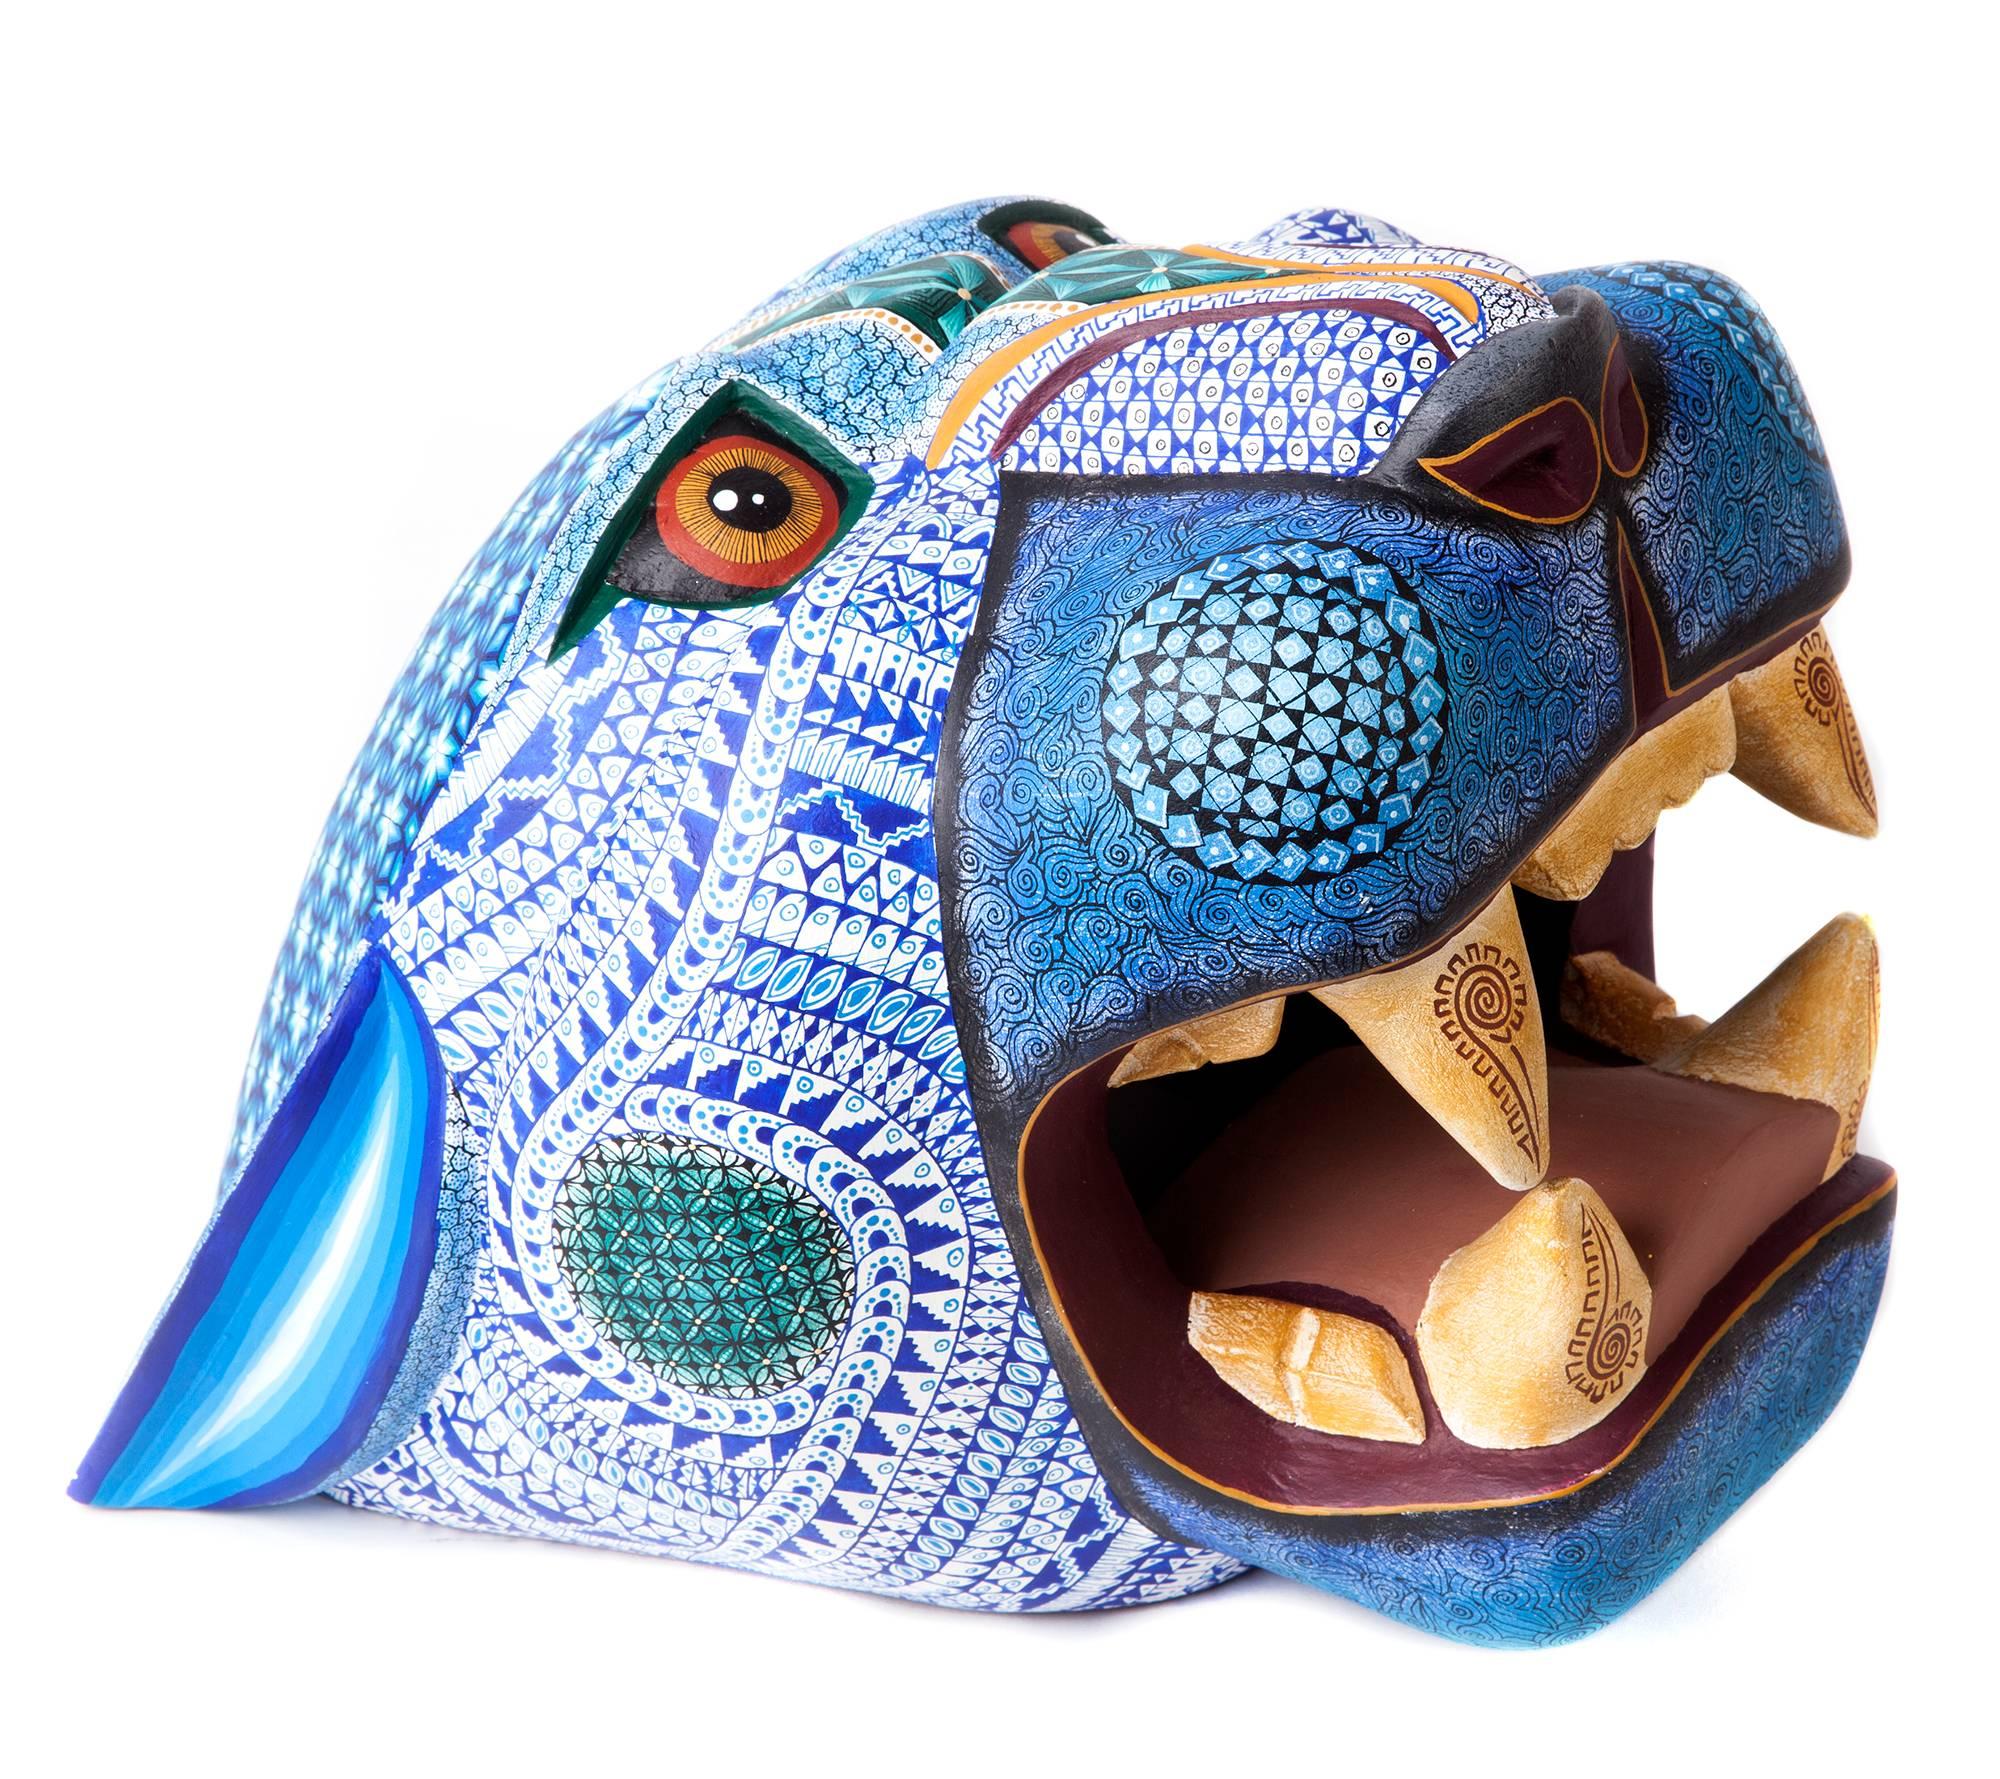 Roxana y Jesus Hernandez Figurative Sculpture - Mascara Jaguar Balam Jade / Wood carving Alebrije Mexican Folk Art Sculpture